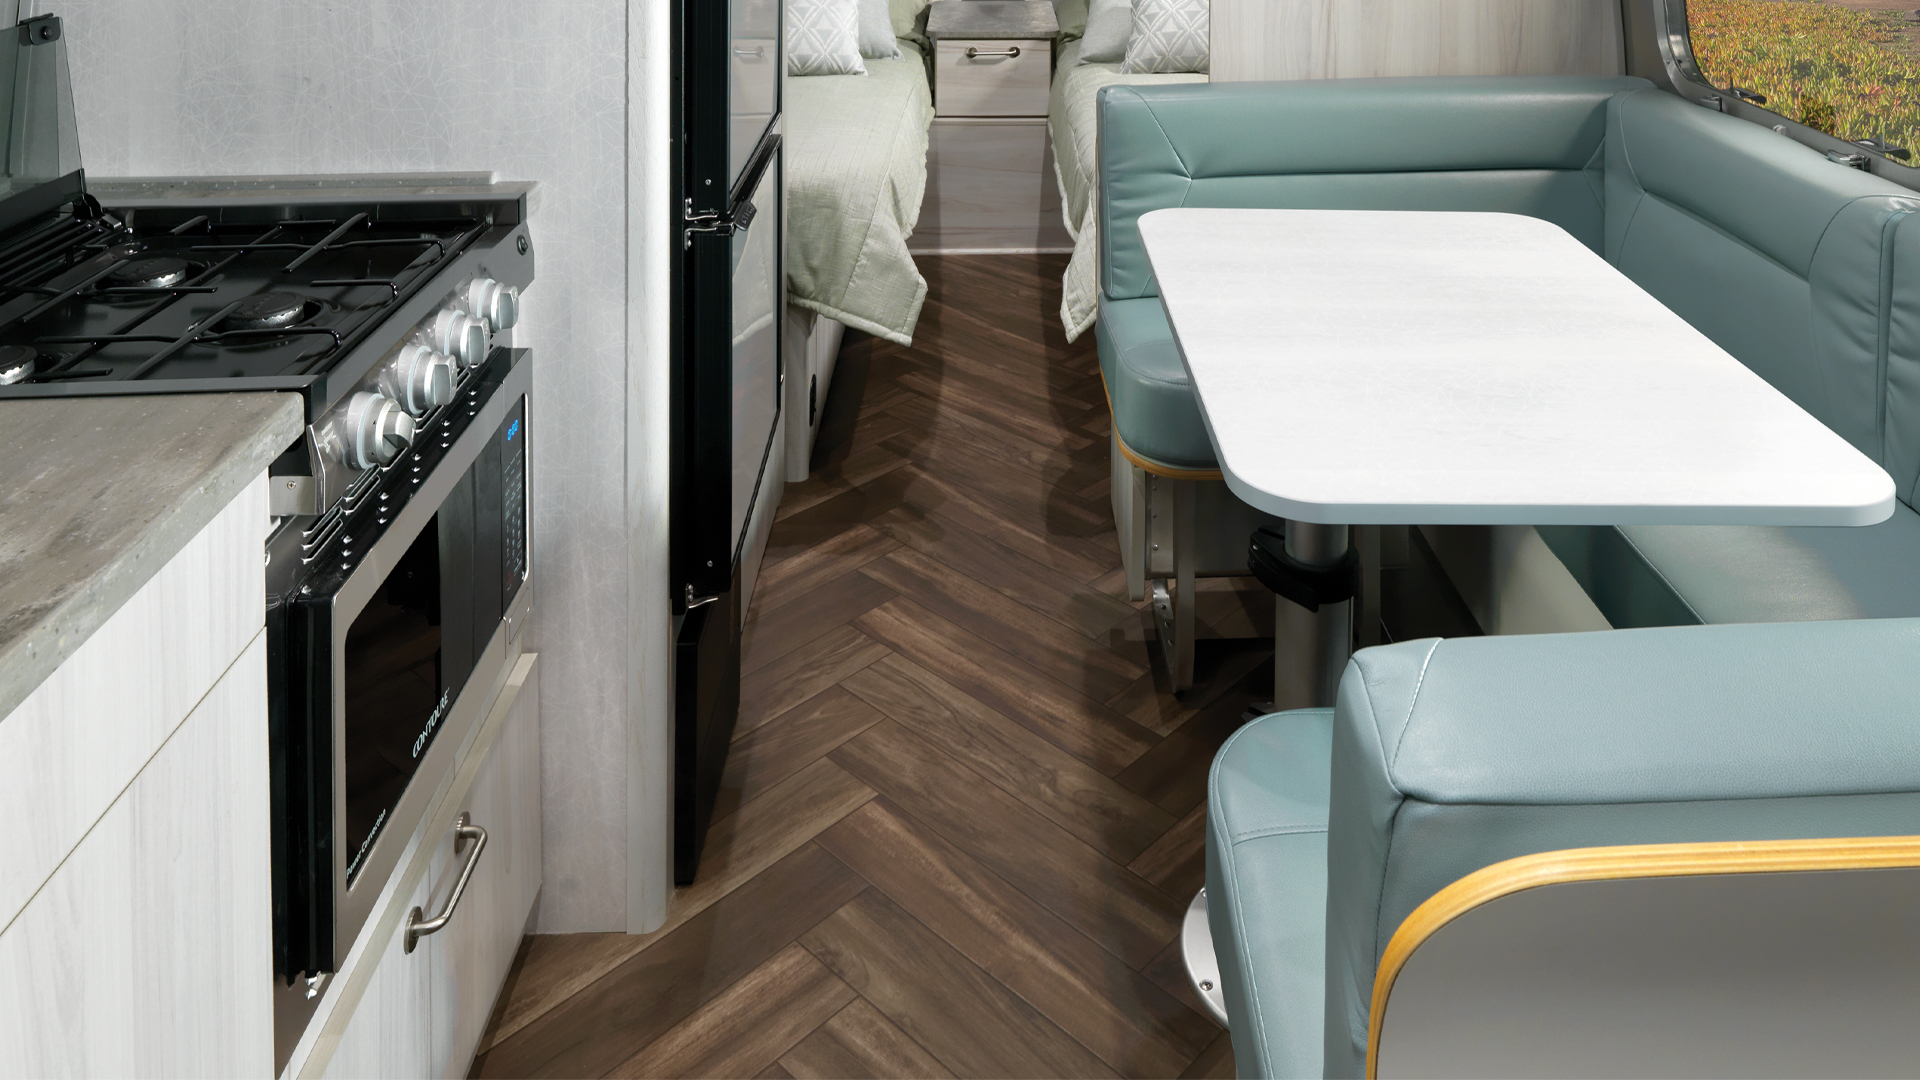 The composite flooring inside the Airstream International Travel trailer.